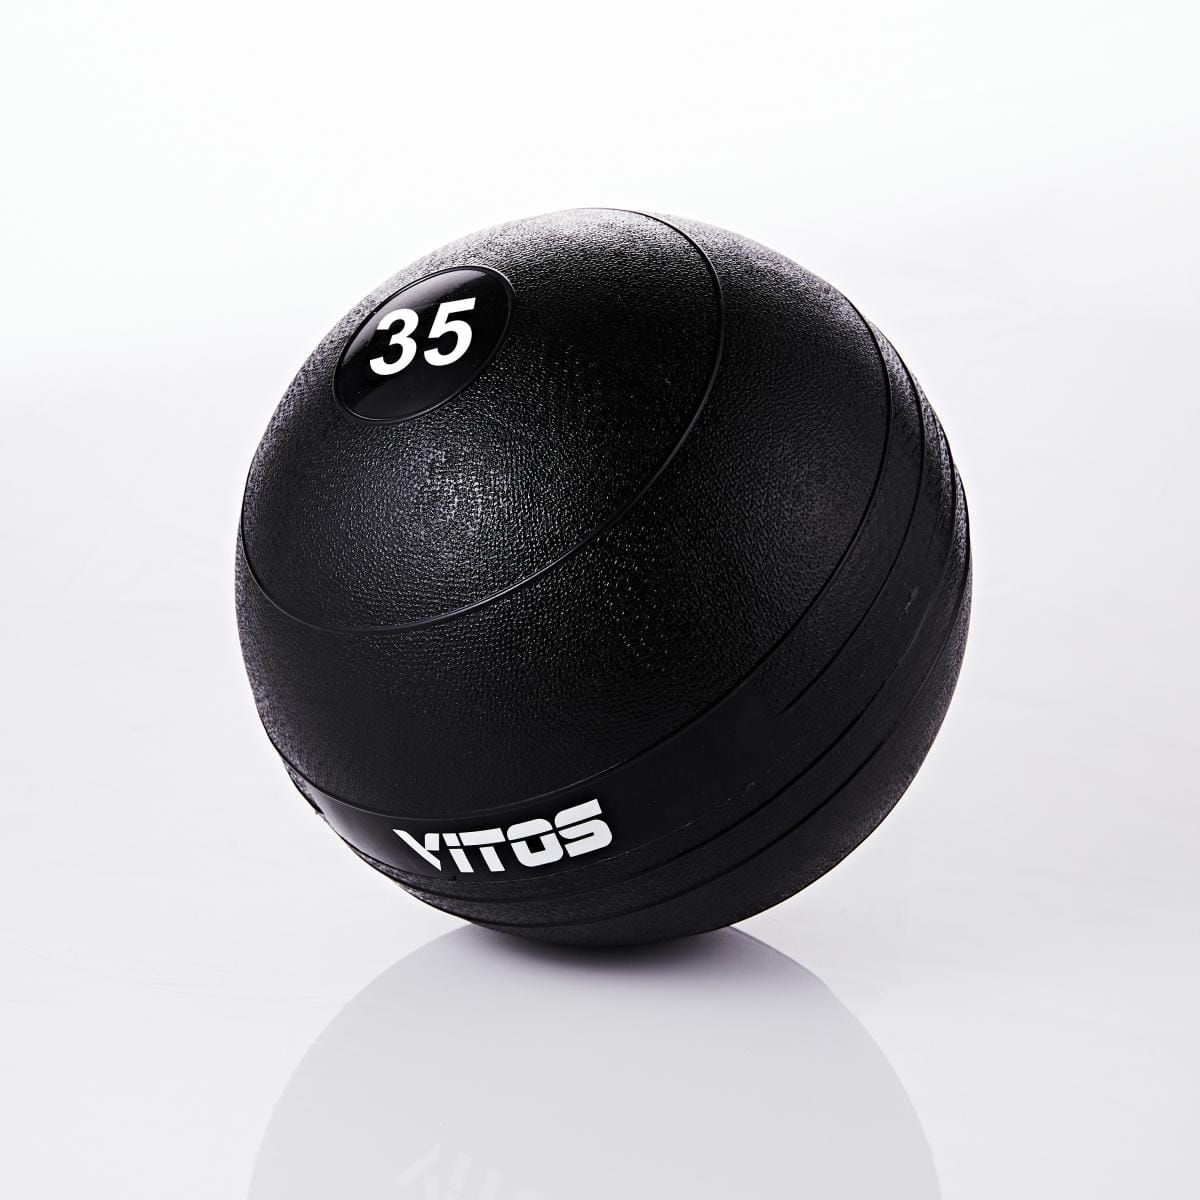 VITOS 重力球 35磅 16公斤 0